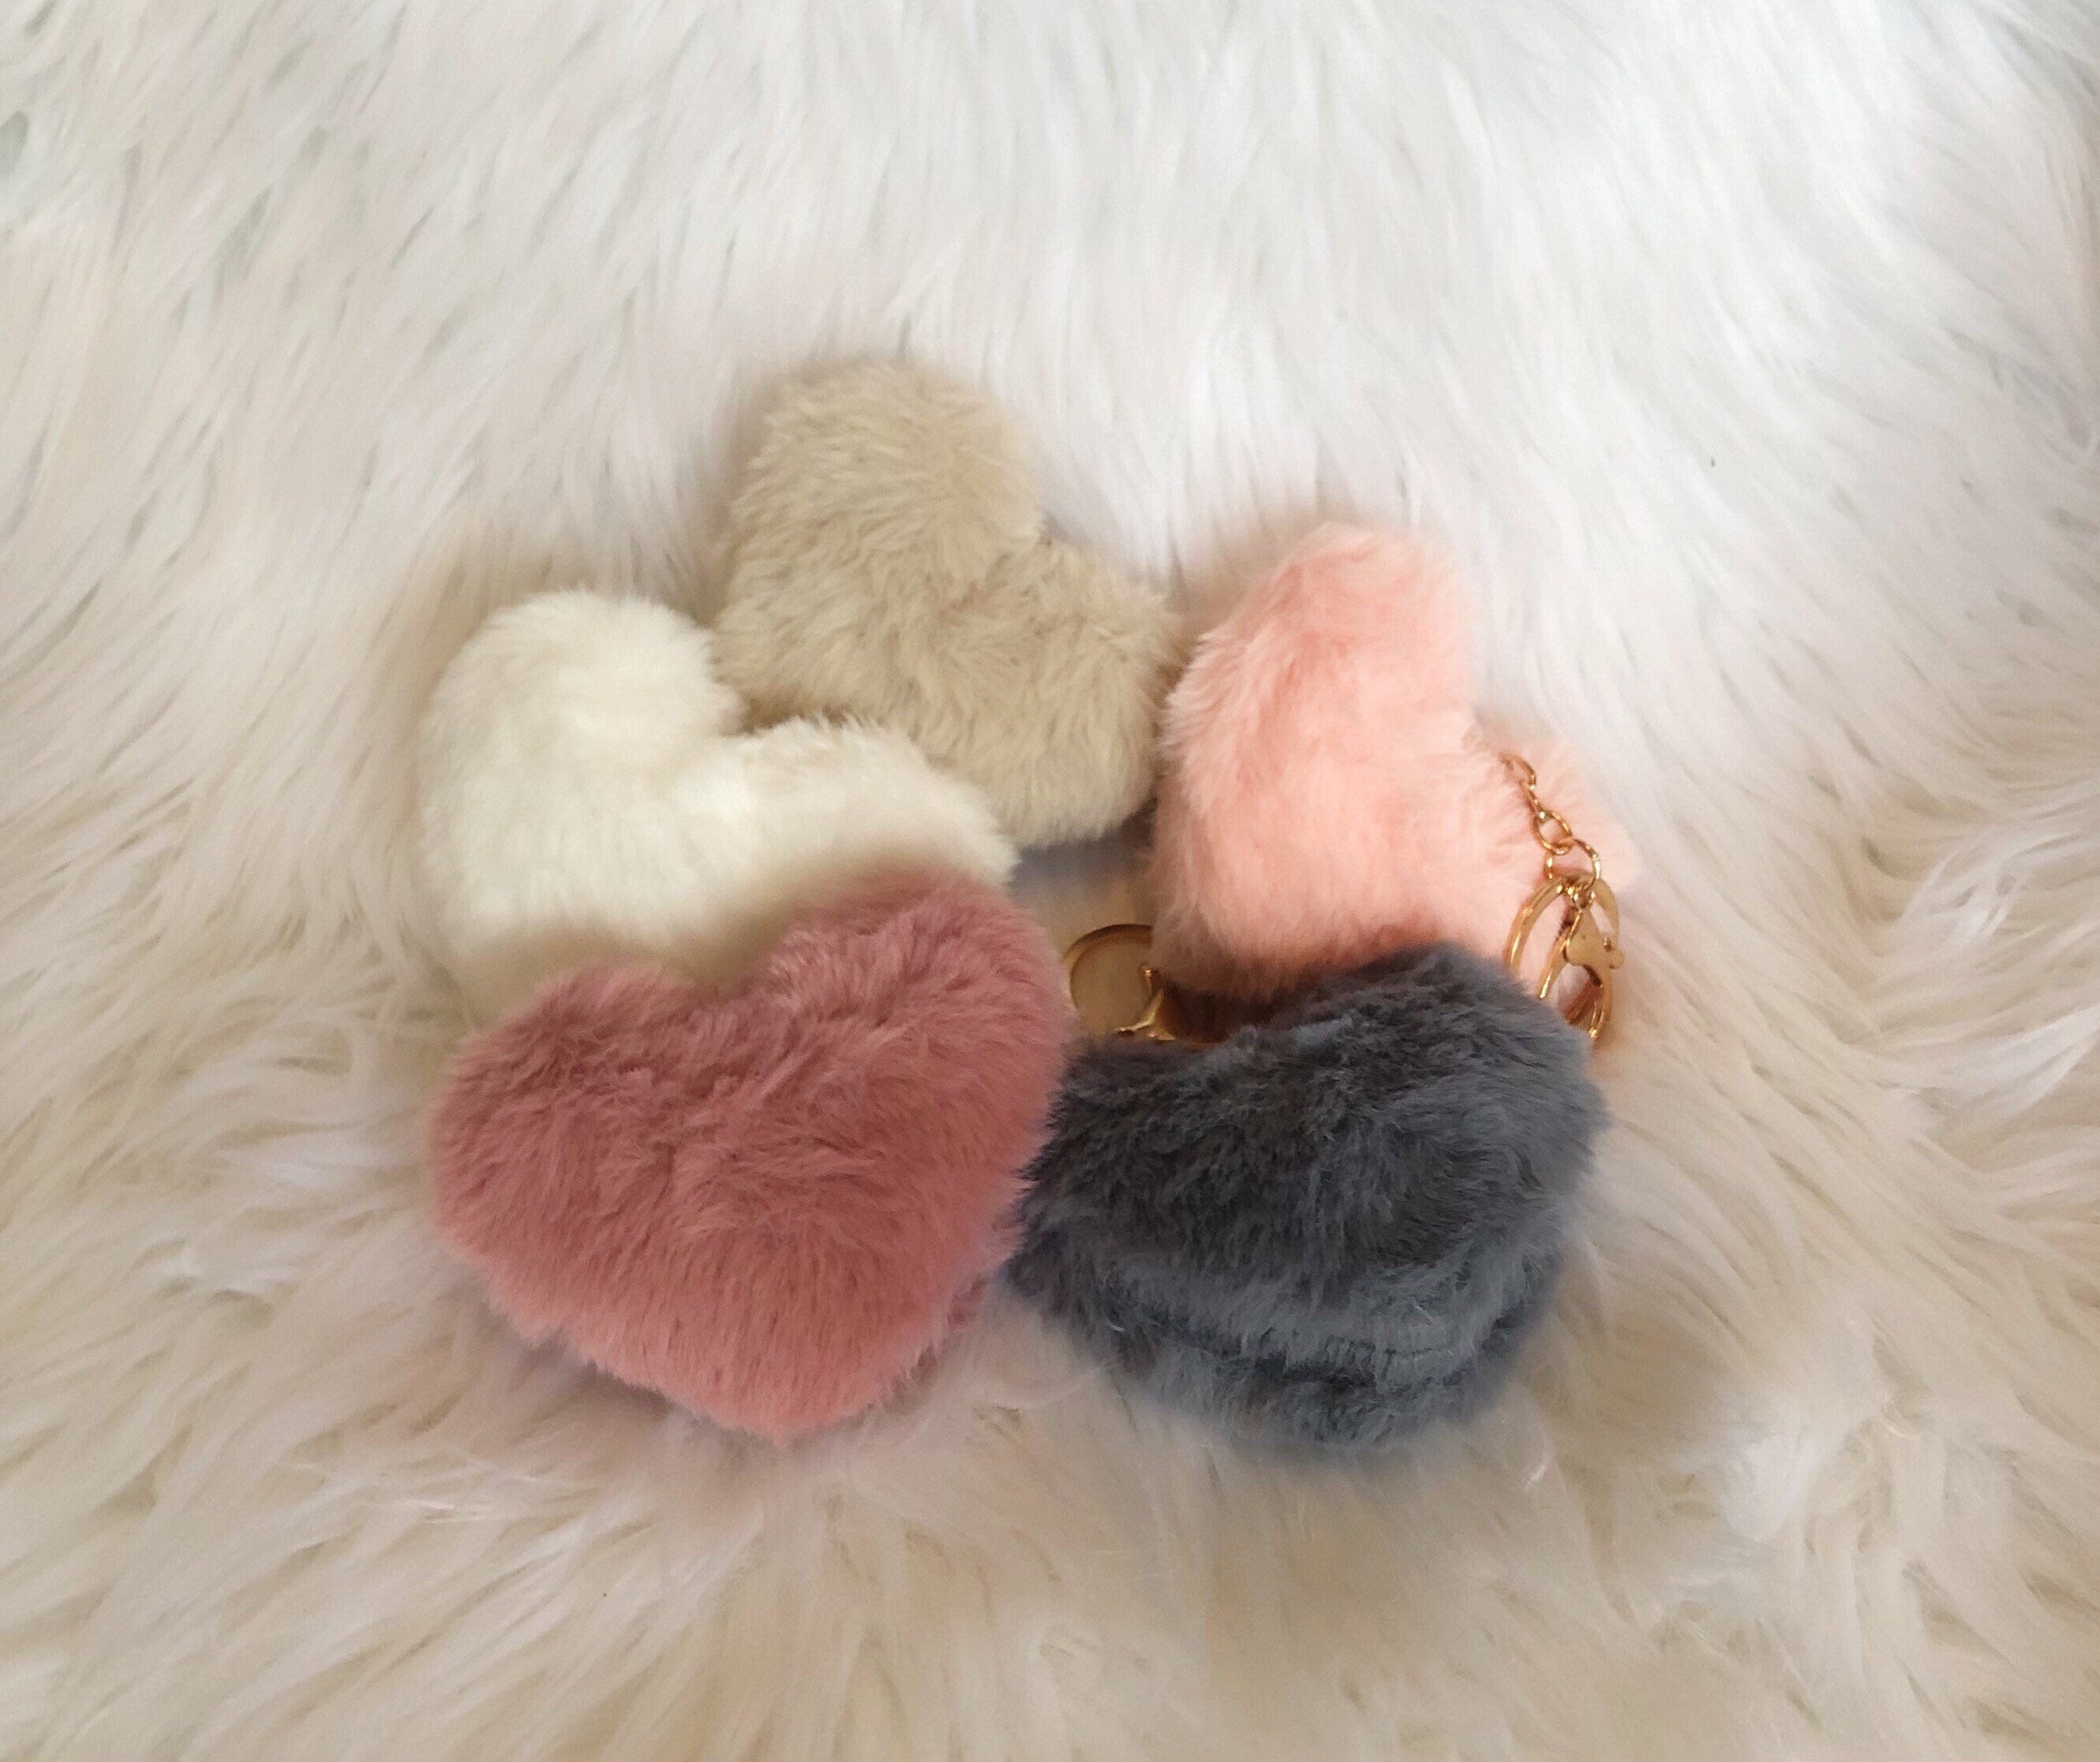 Aliexpress 12pcs Colored Pom Pom Keychain Bulk Heart Fluffy Fur Puff Ball Key for Women